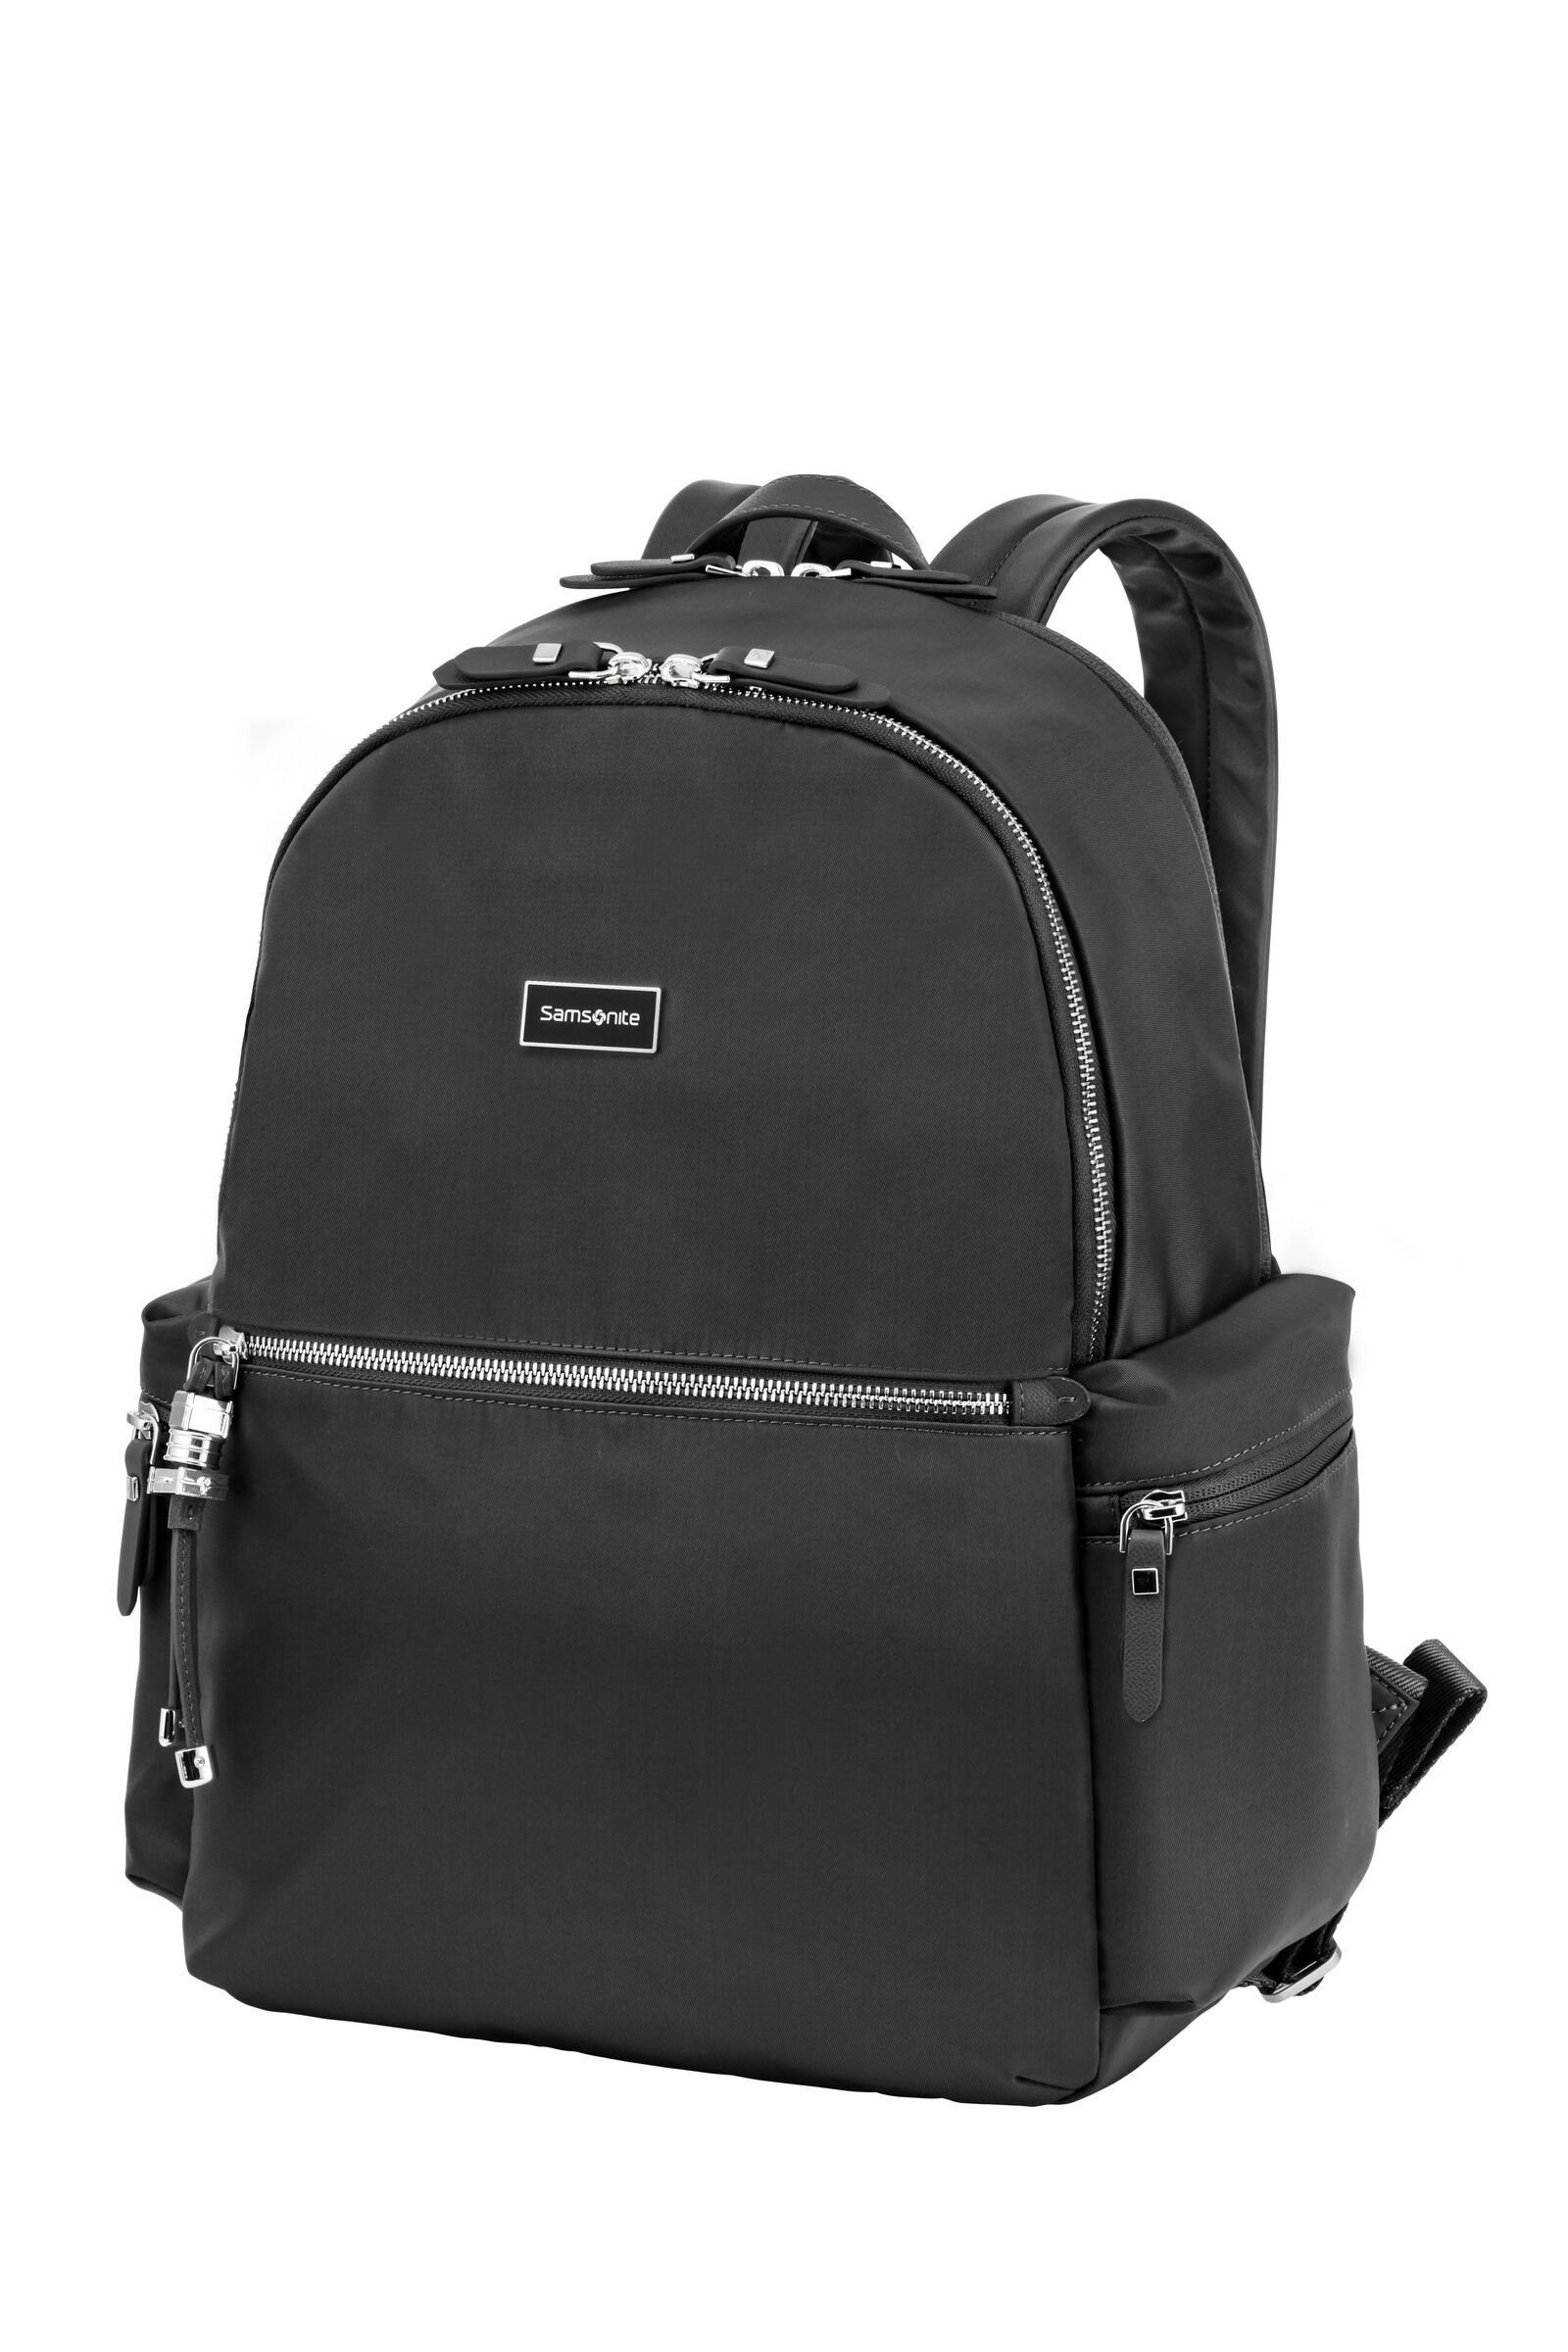 Samsonite Tectonic 2 Large Backpack – Luggage Pros